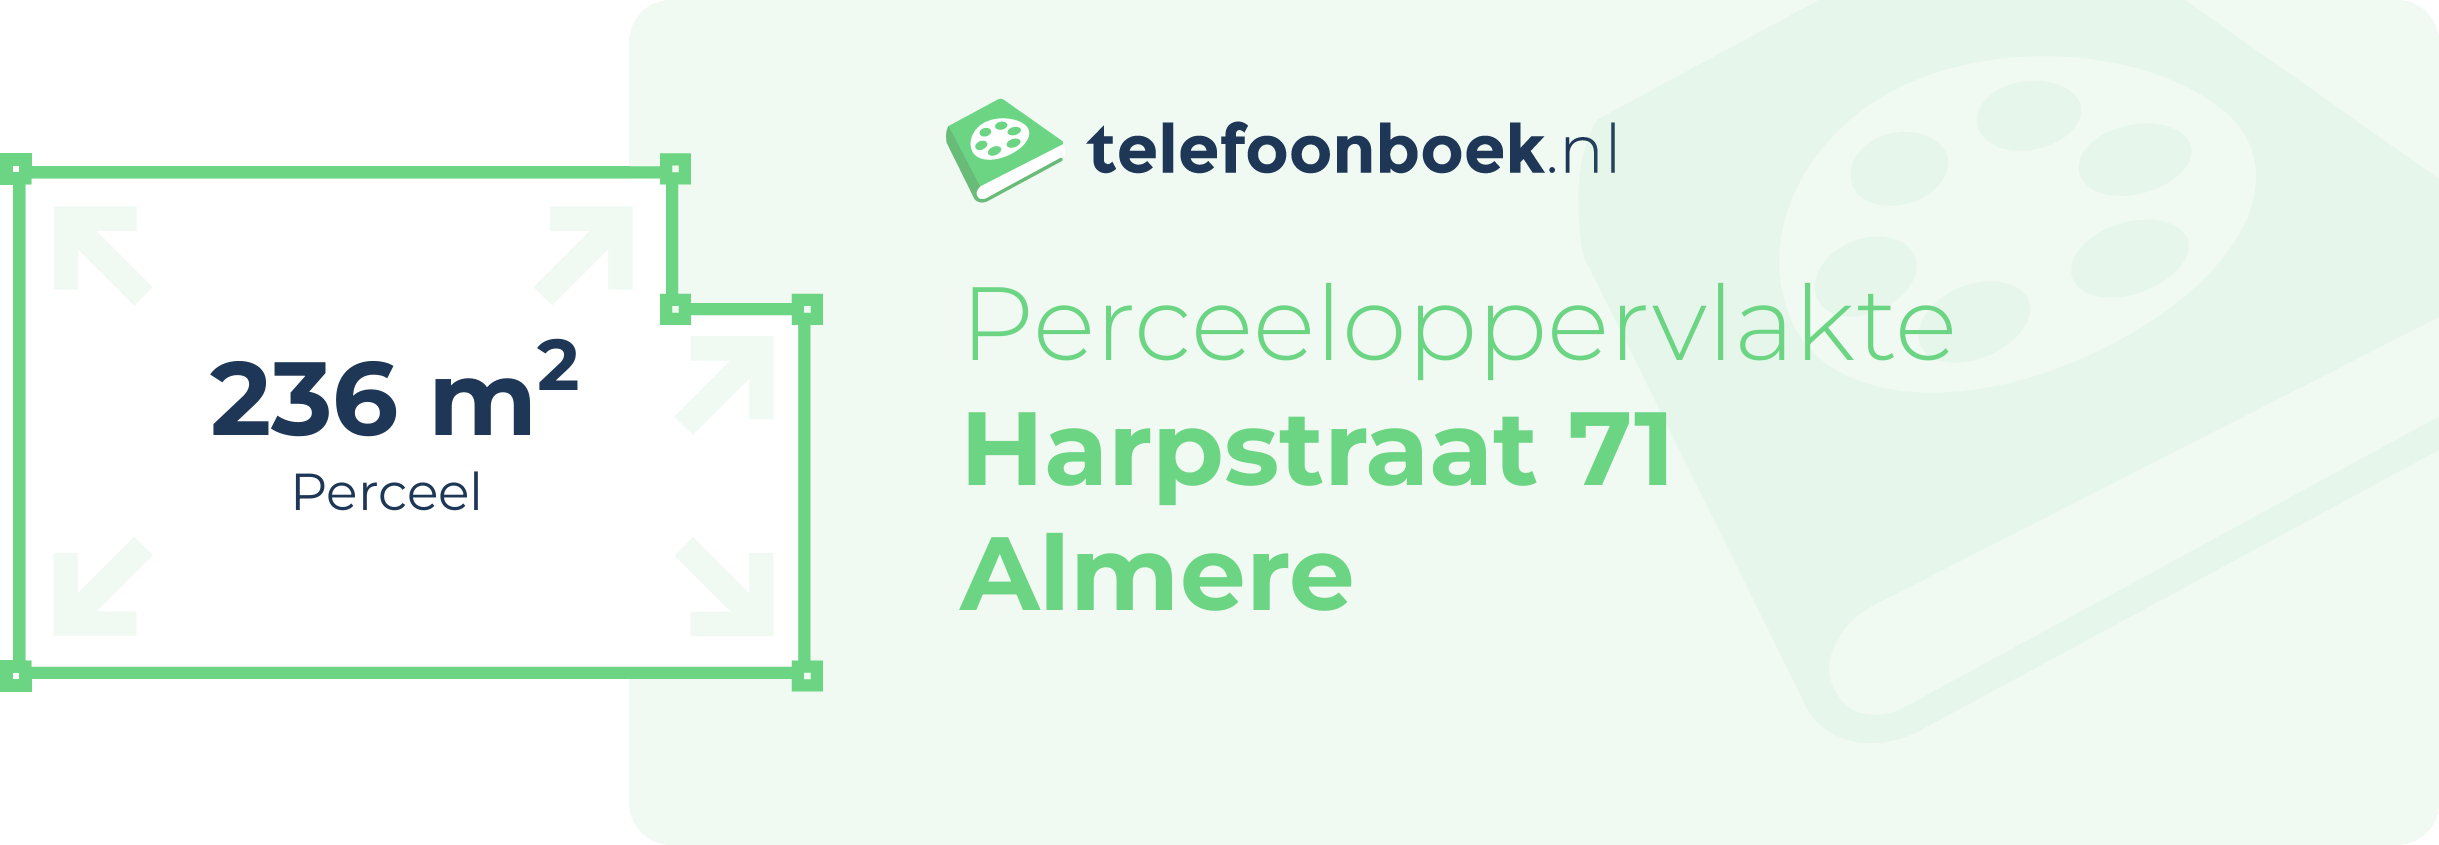 Perceeloppervlakte Harpstraat 71 Almere